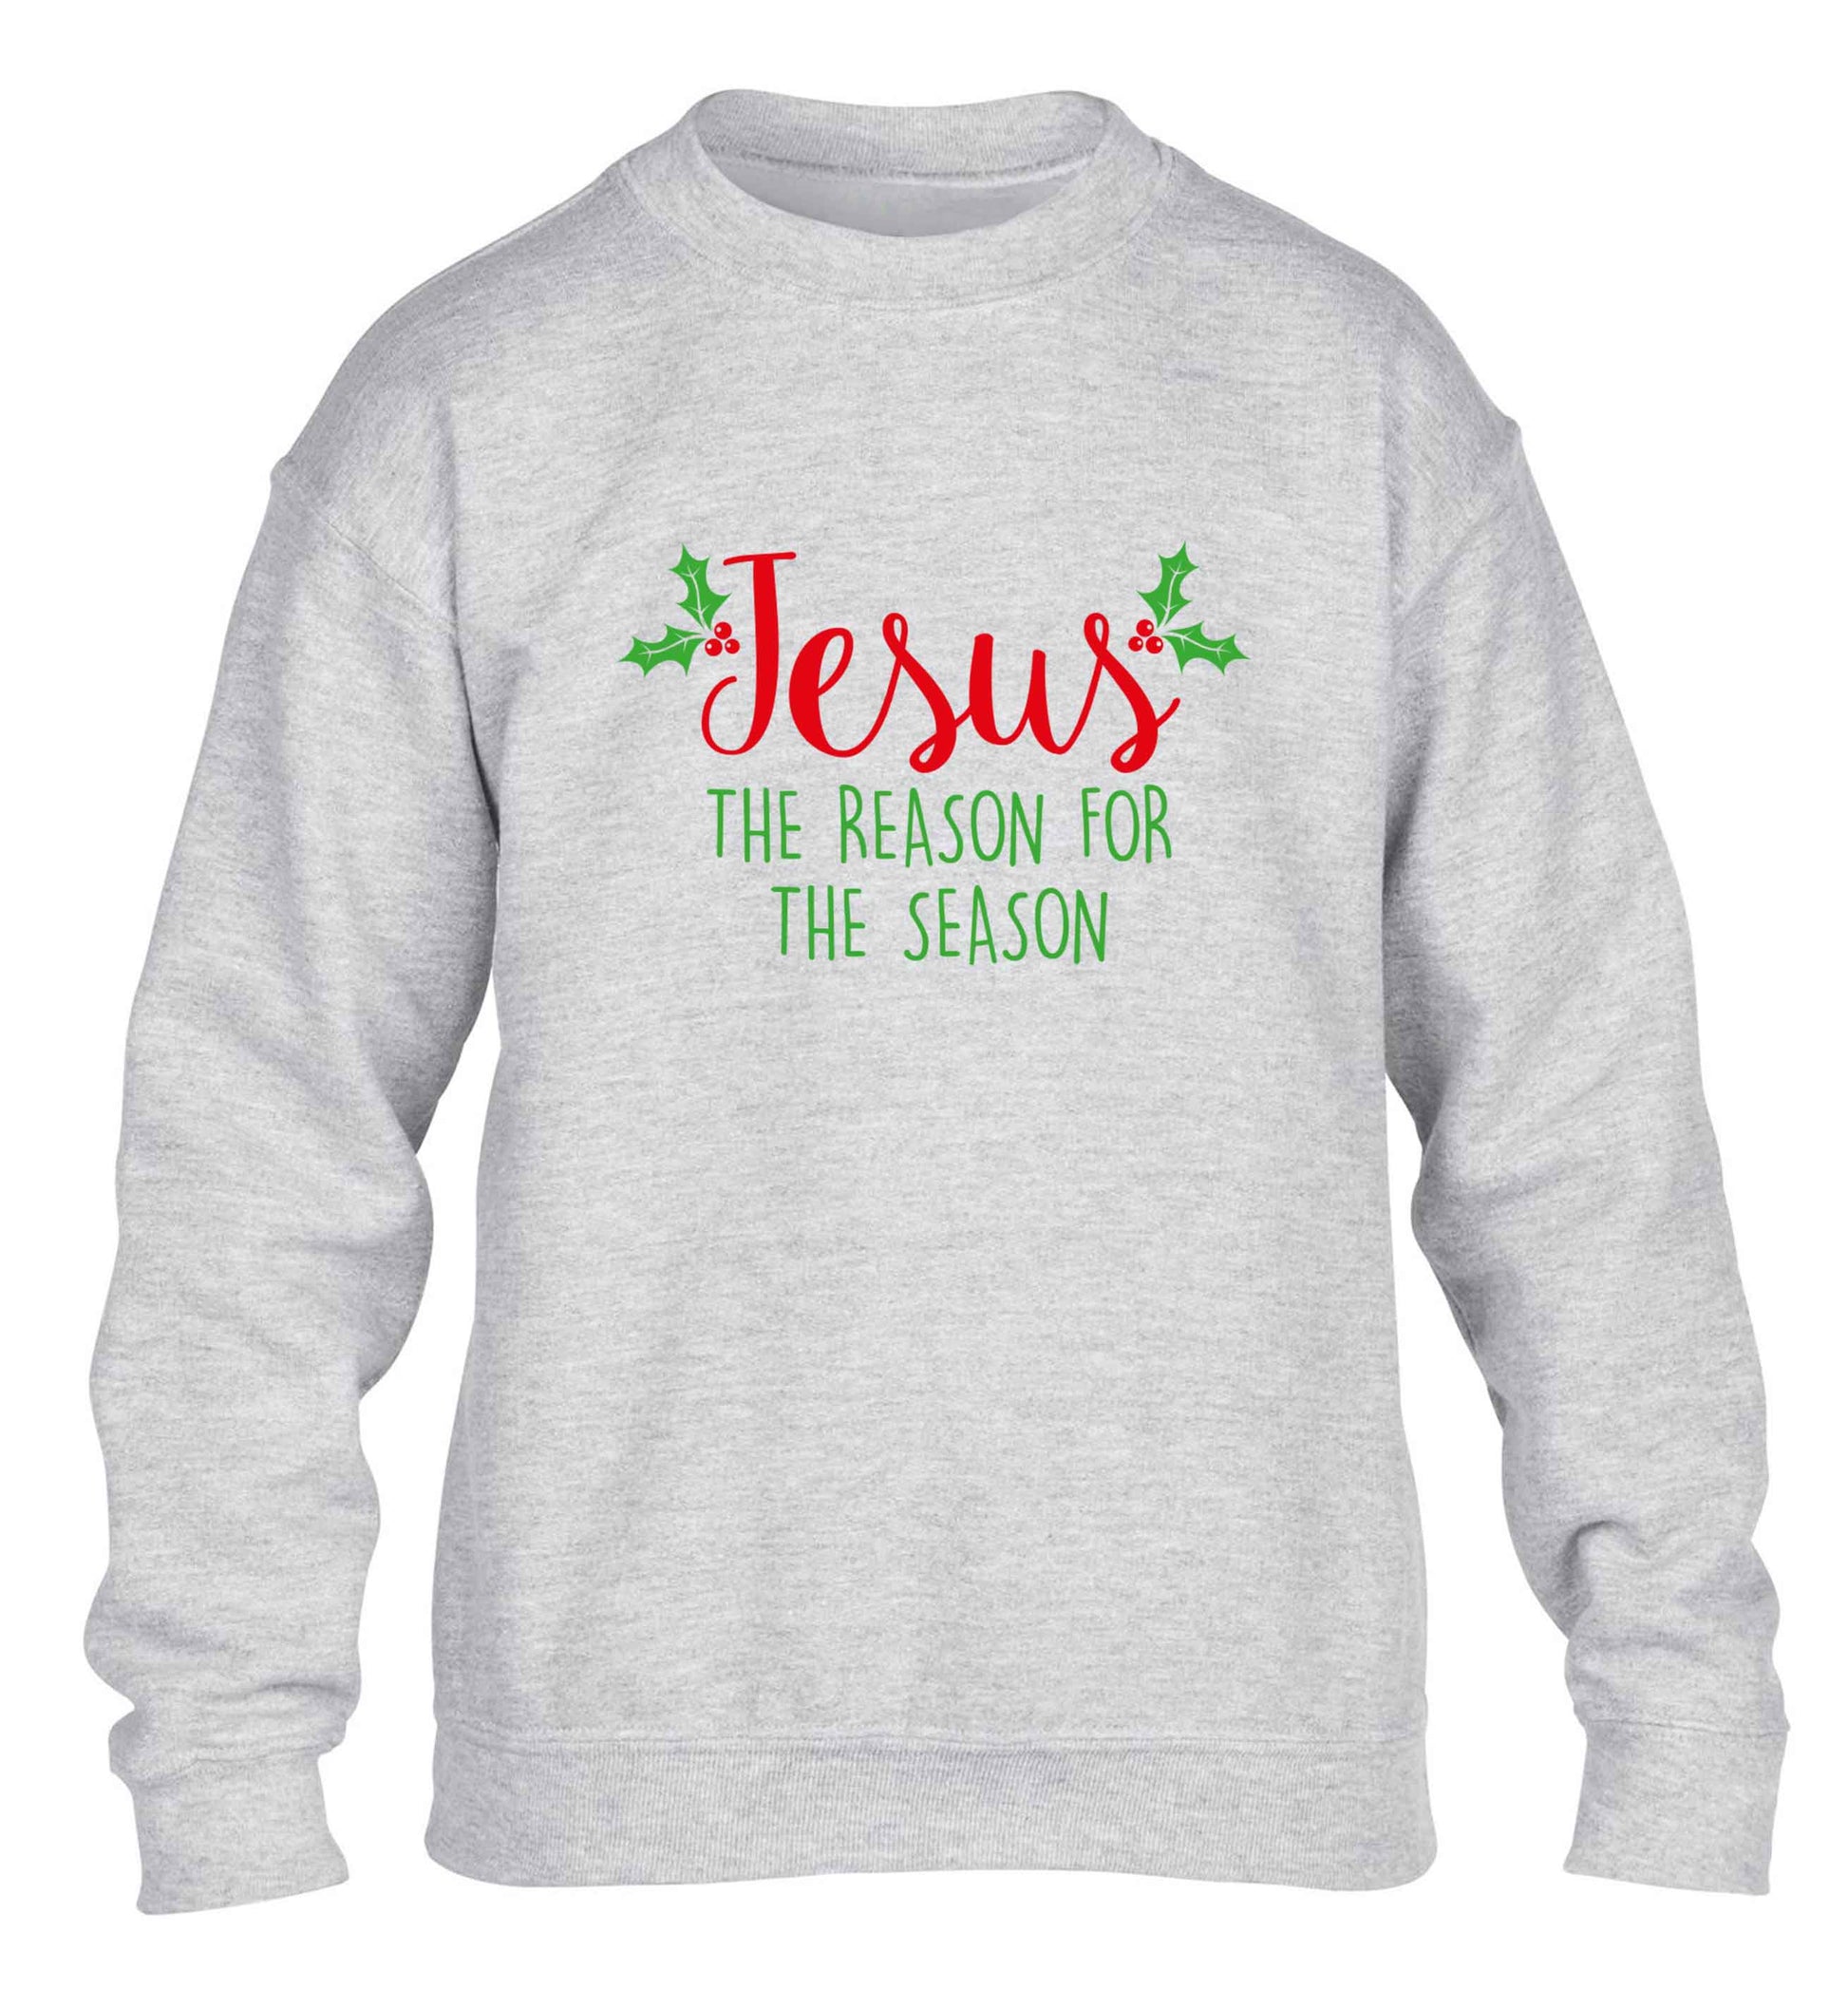 Jesus the reason for the season children's grey sweater 12-13 Years